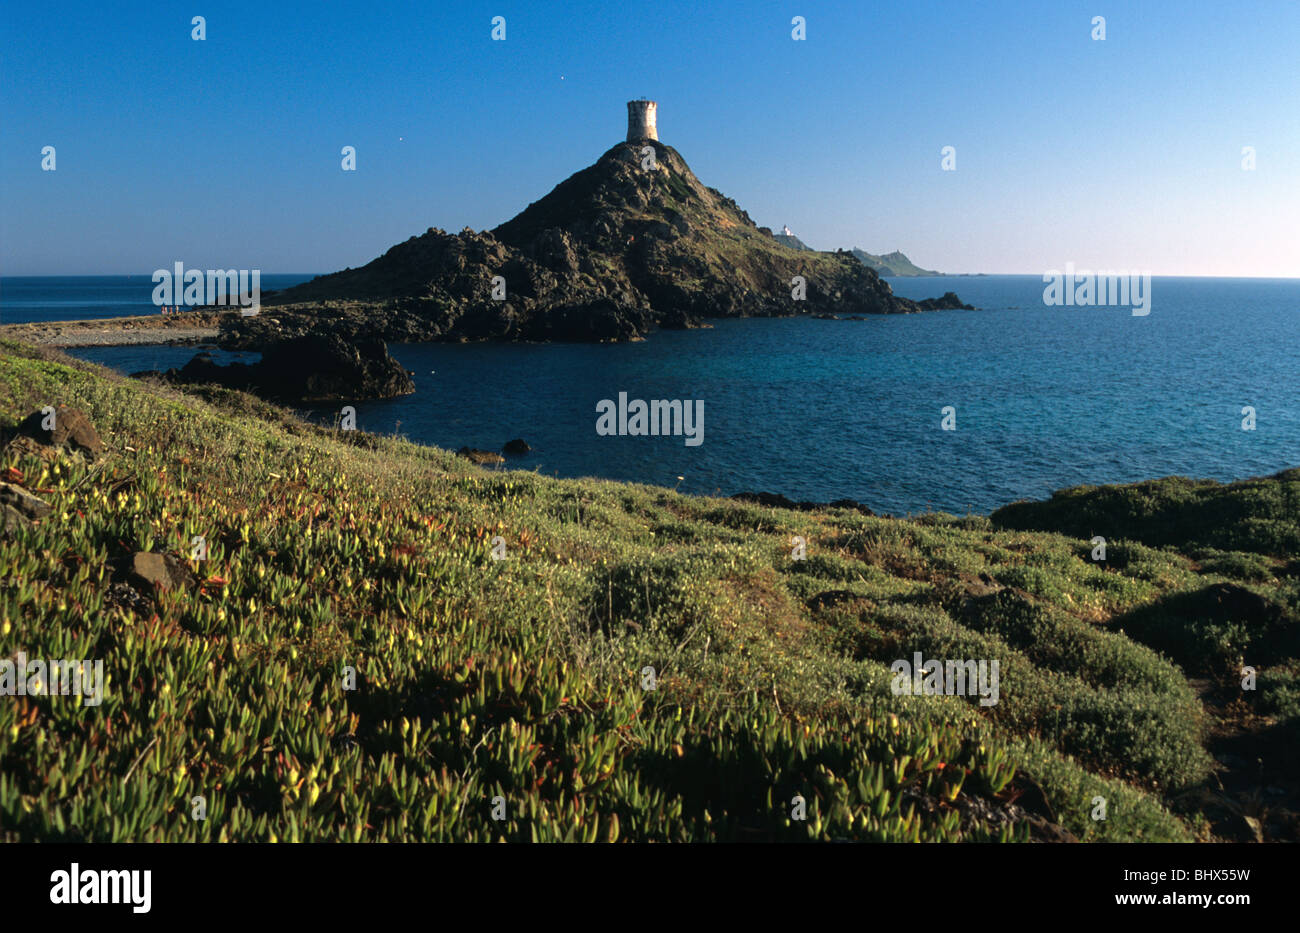 Parata Point or Headland, Pointe de la Parata, with Genoese Tower,and Îles Sanguinaires Islands, near Ajaccio, Corsica, France Stock Photo